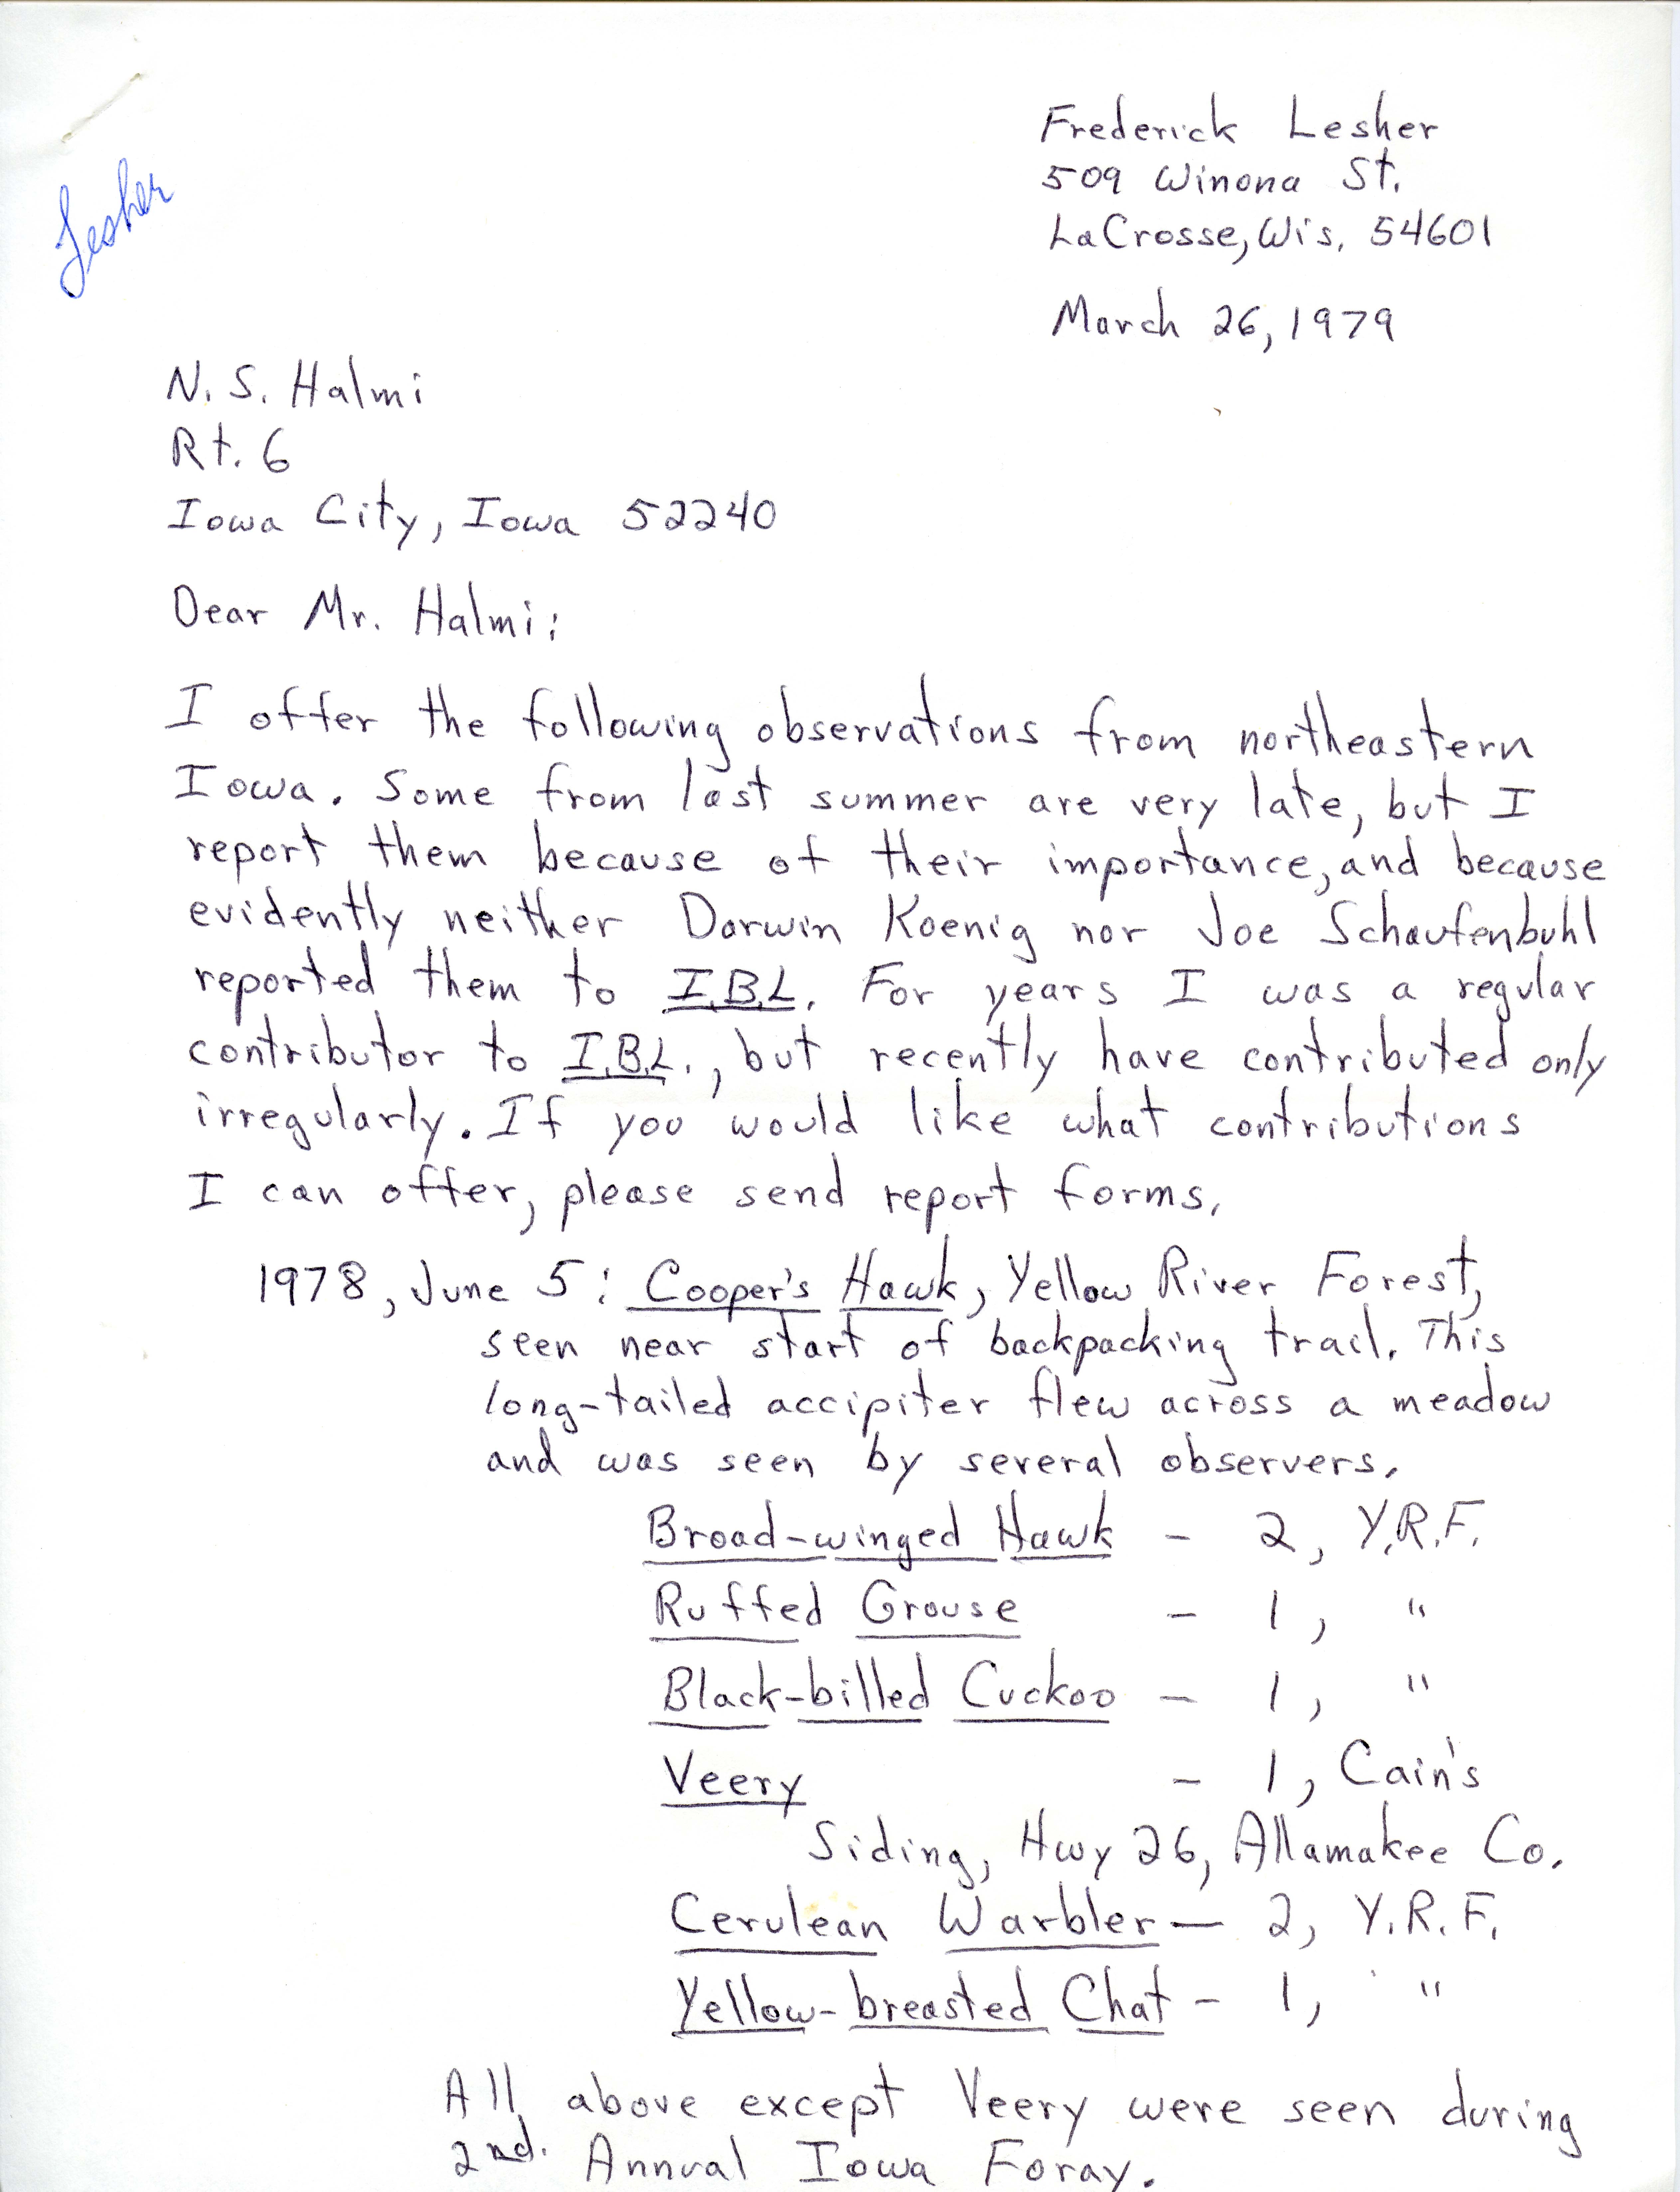 Fred Lesher letter to Nicholas S. Halmi regarding bird sightings, March 26, 1979